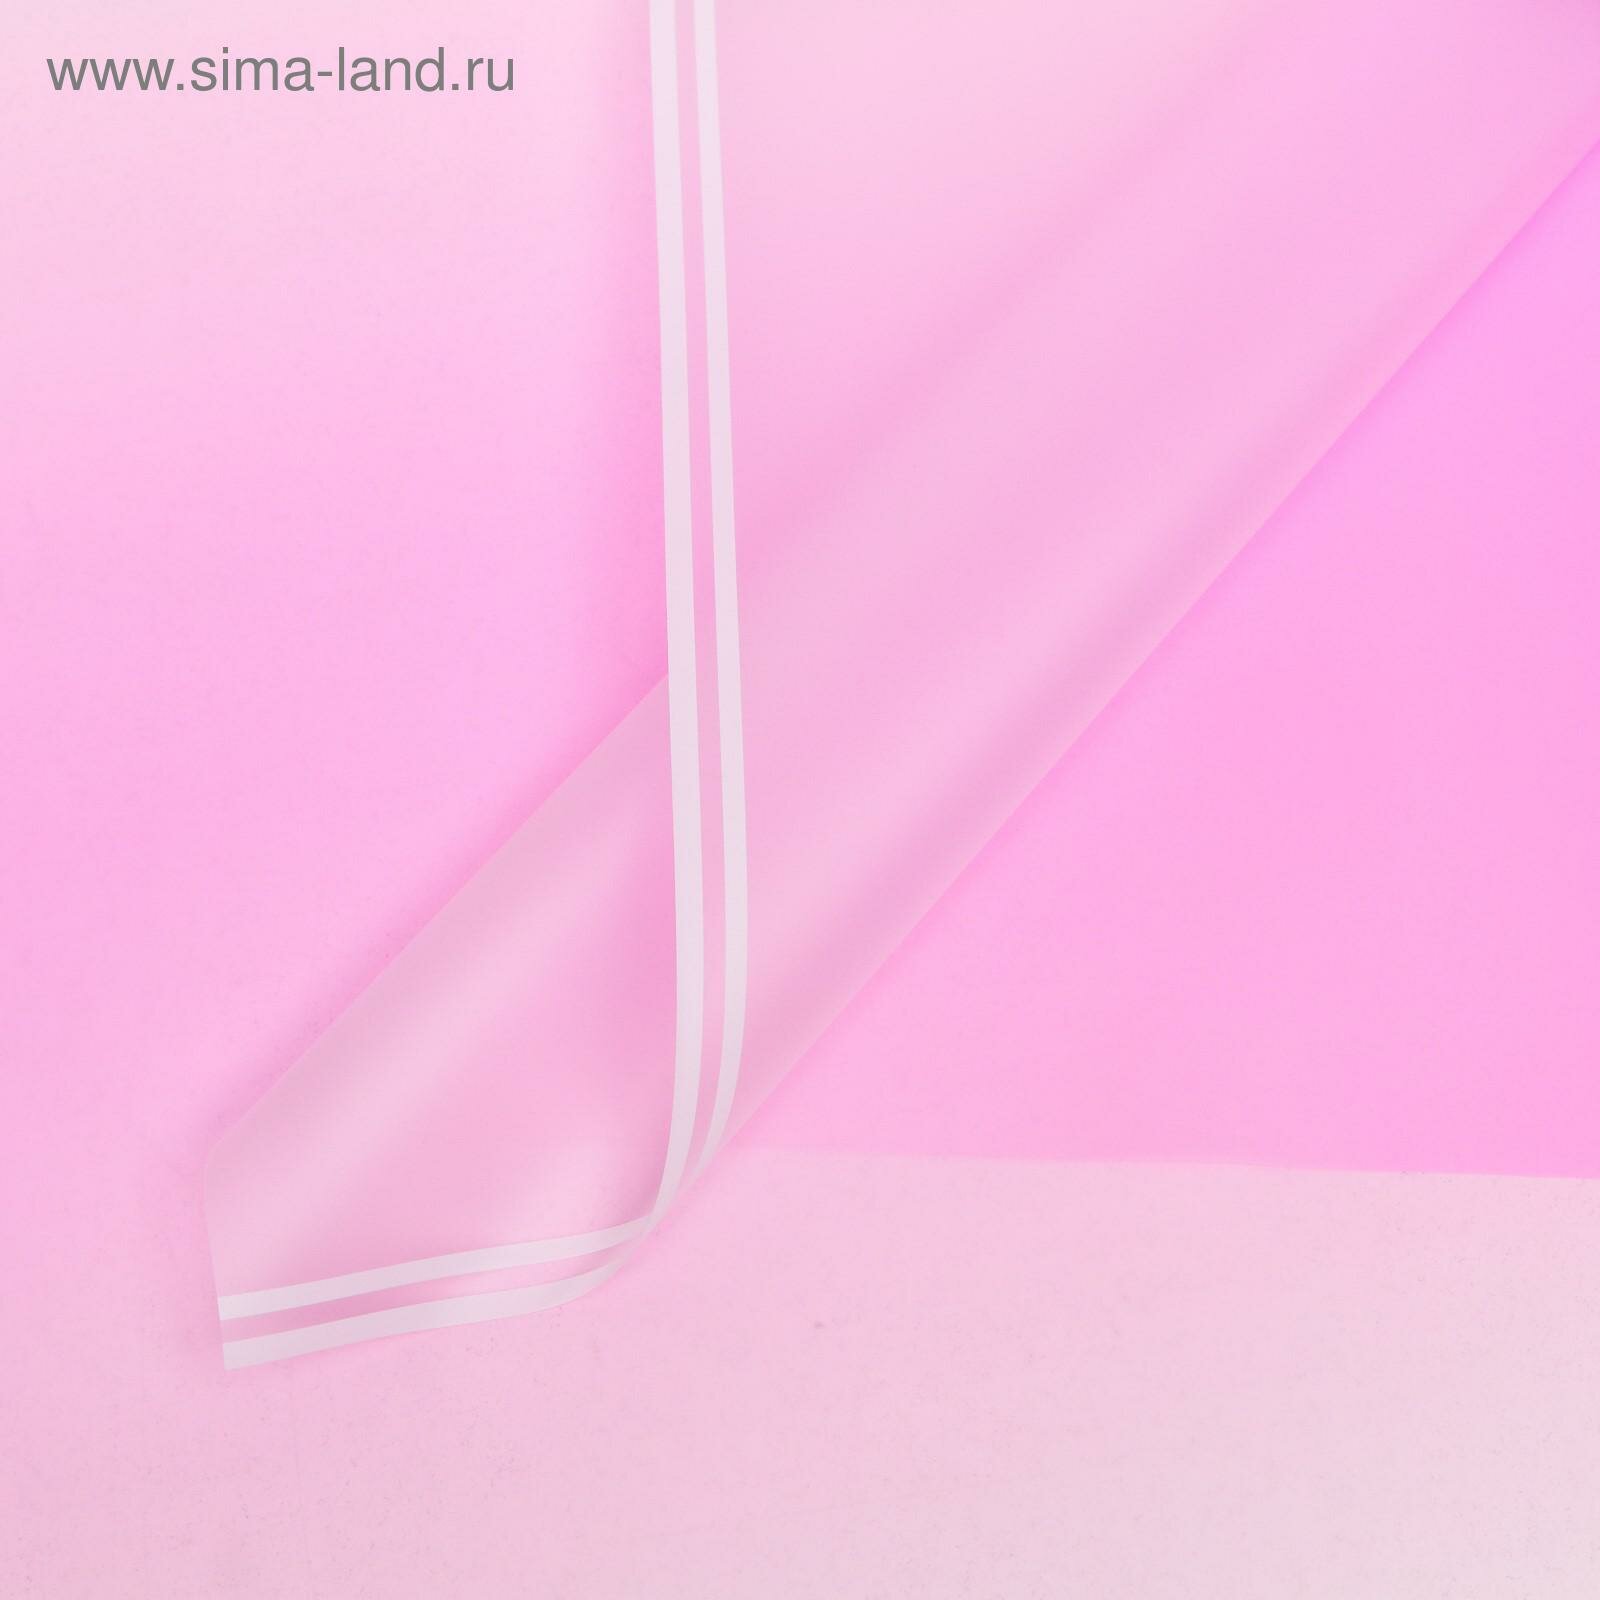 Плёнка матовая "Линия градиента" светло-фиолетовый, 0,58 х 0,58 м (20шт.)